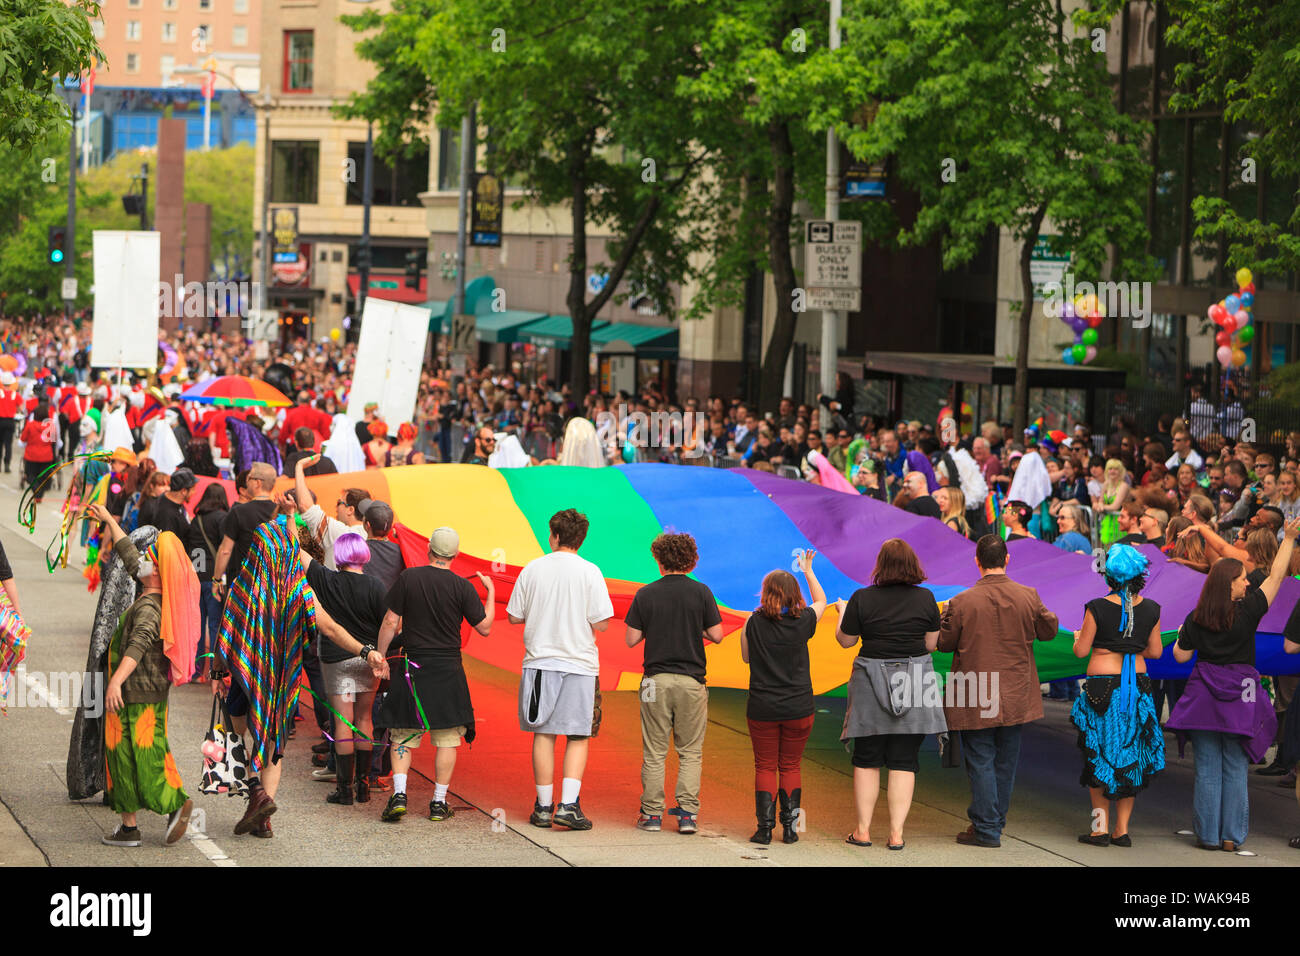 Seattle Pride Parade on 4th Avenue. Downtown Seattle, Washington State